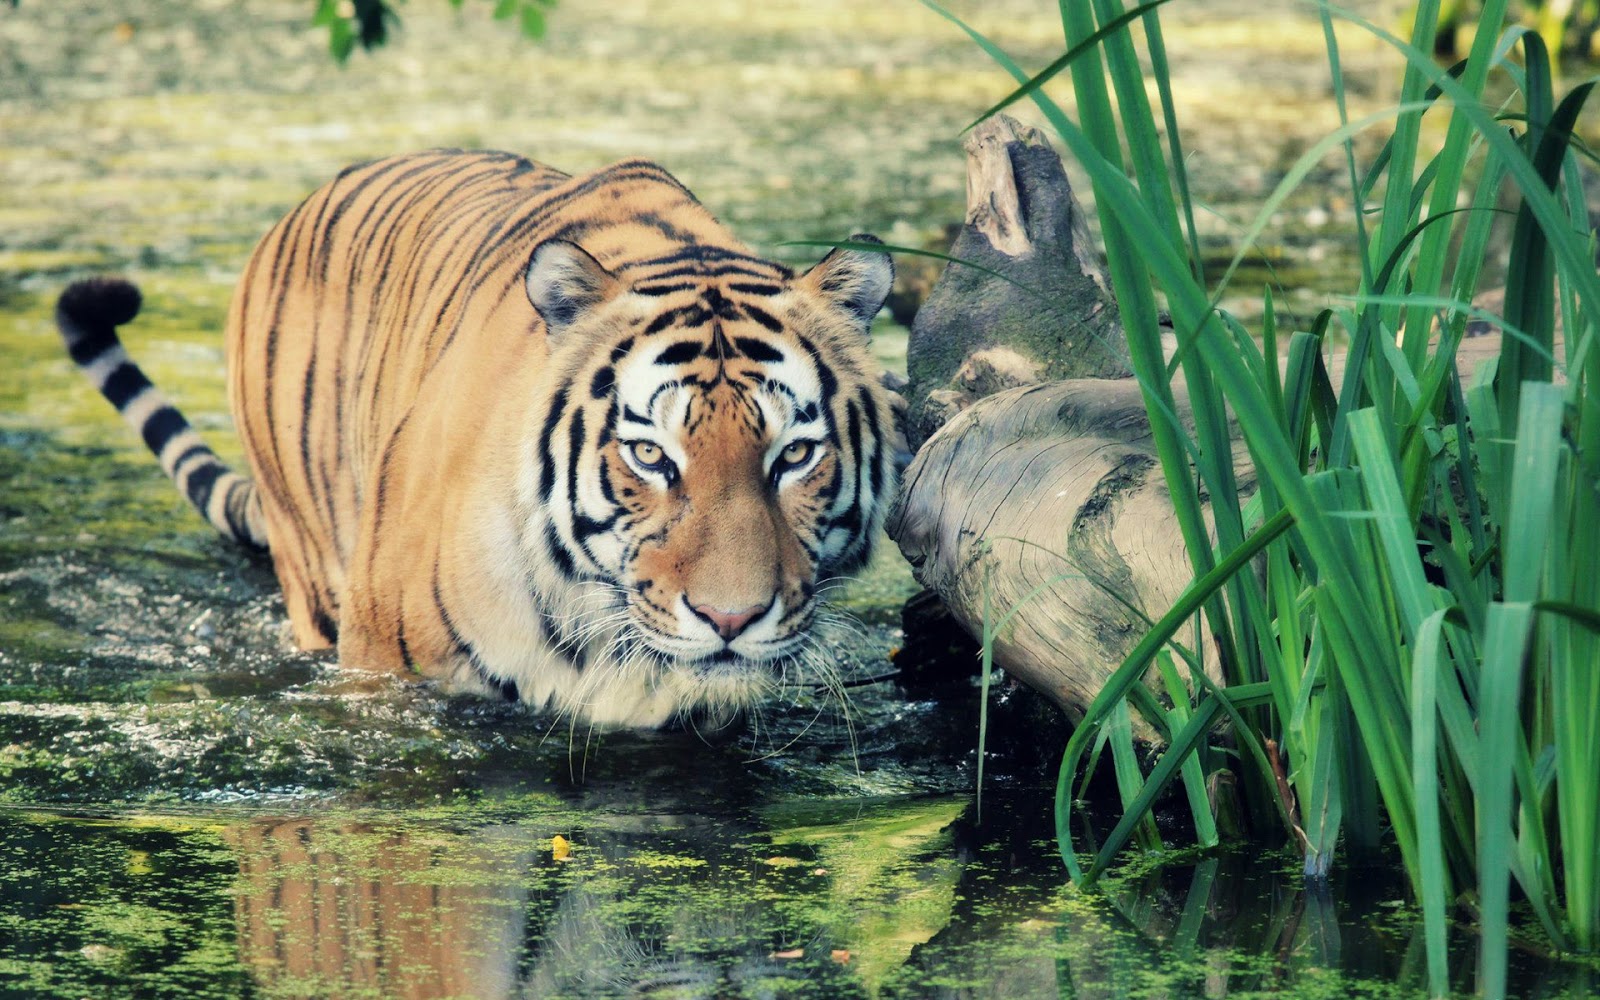 Wildlife Of The World Tiger Desktop Wallpaper HD